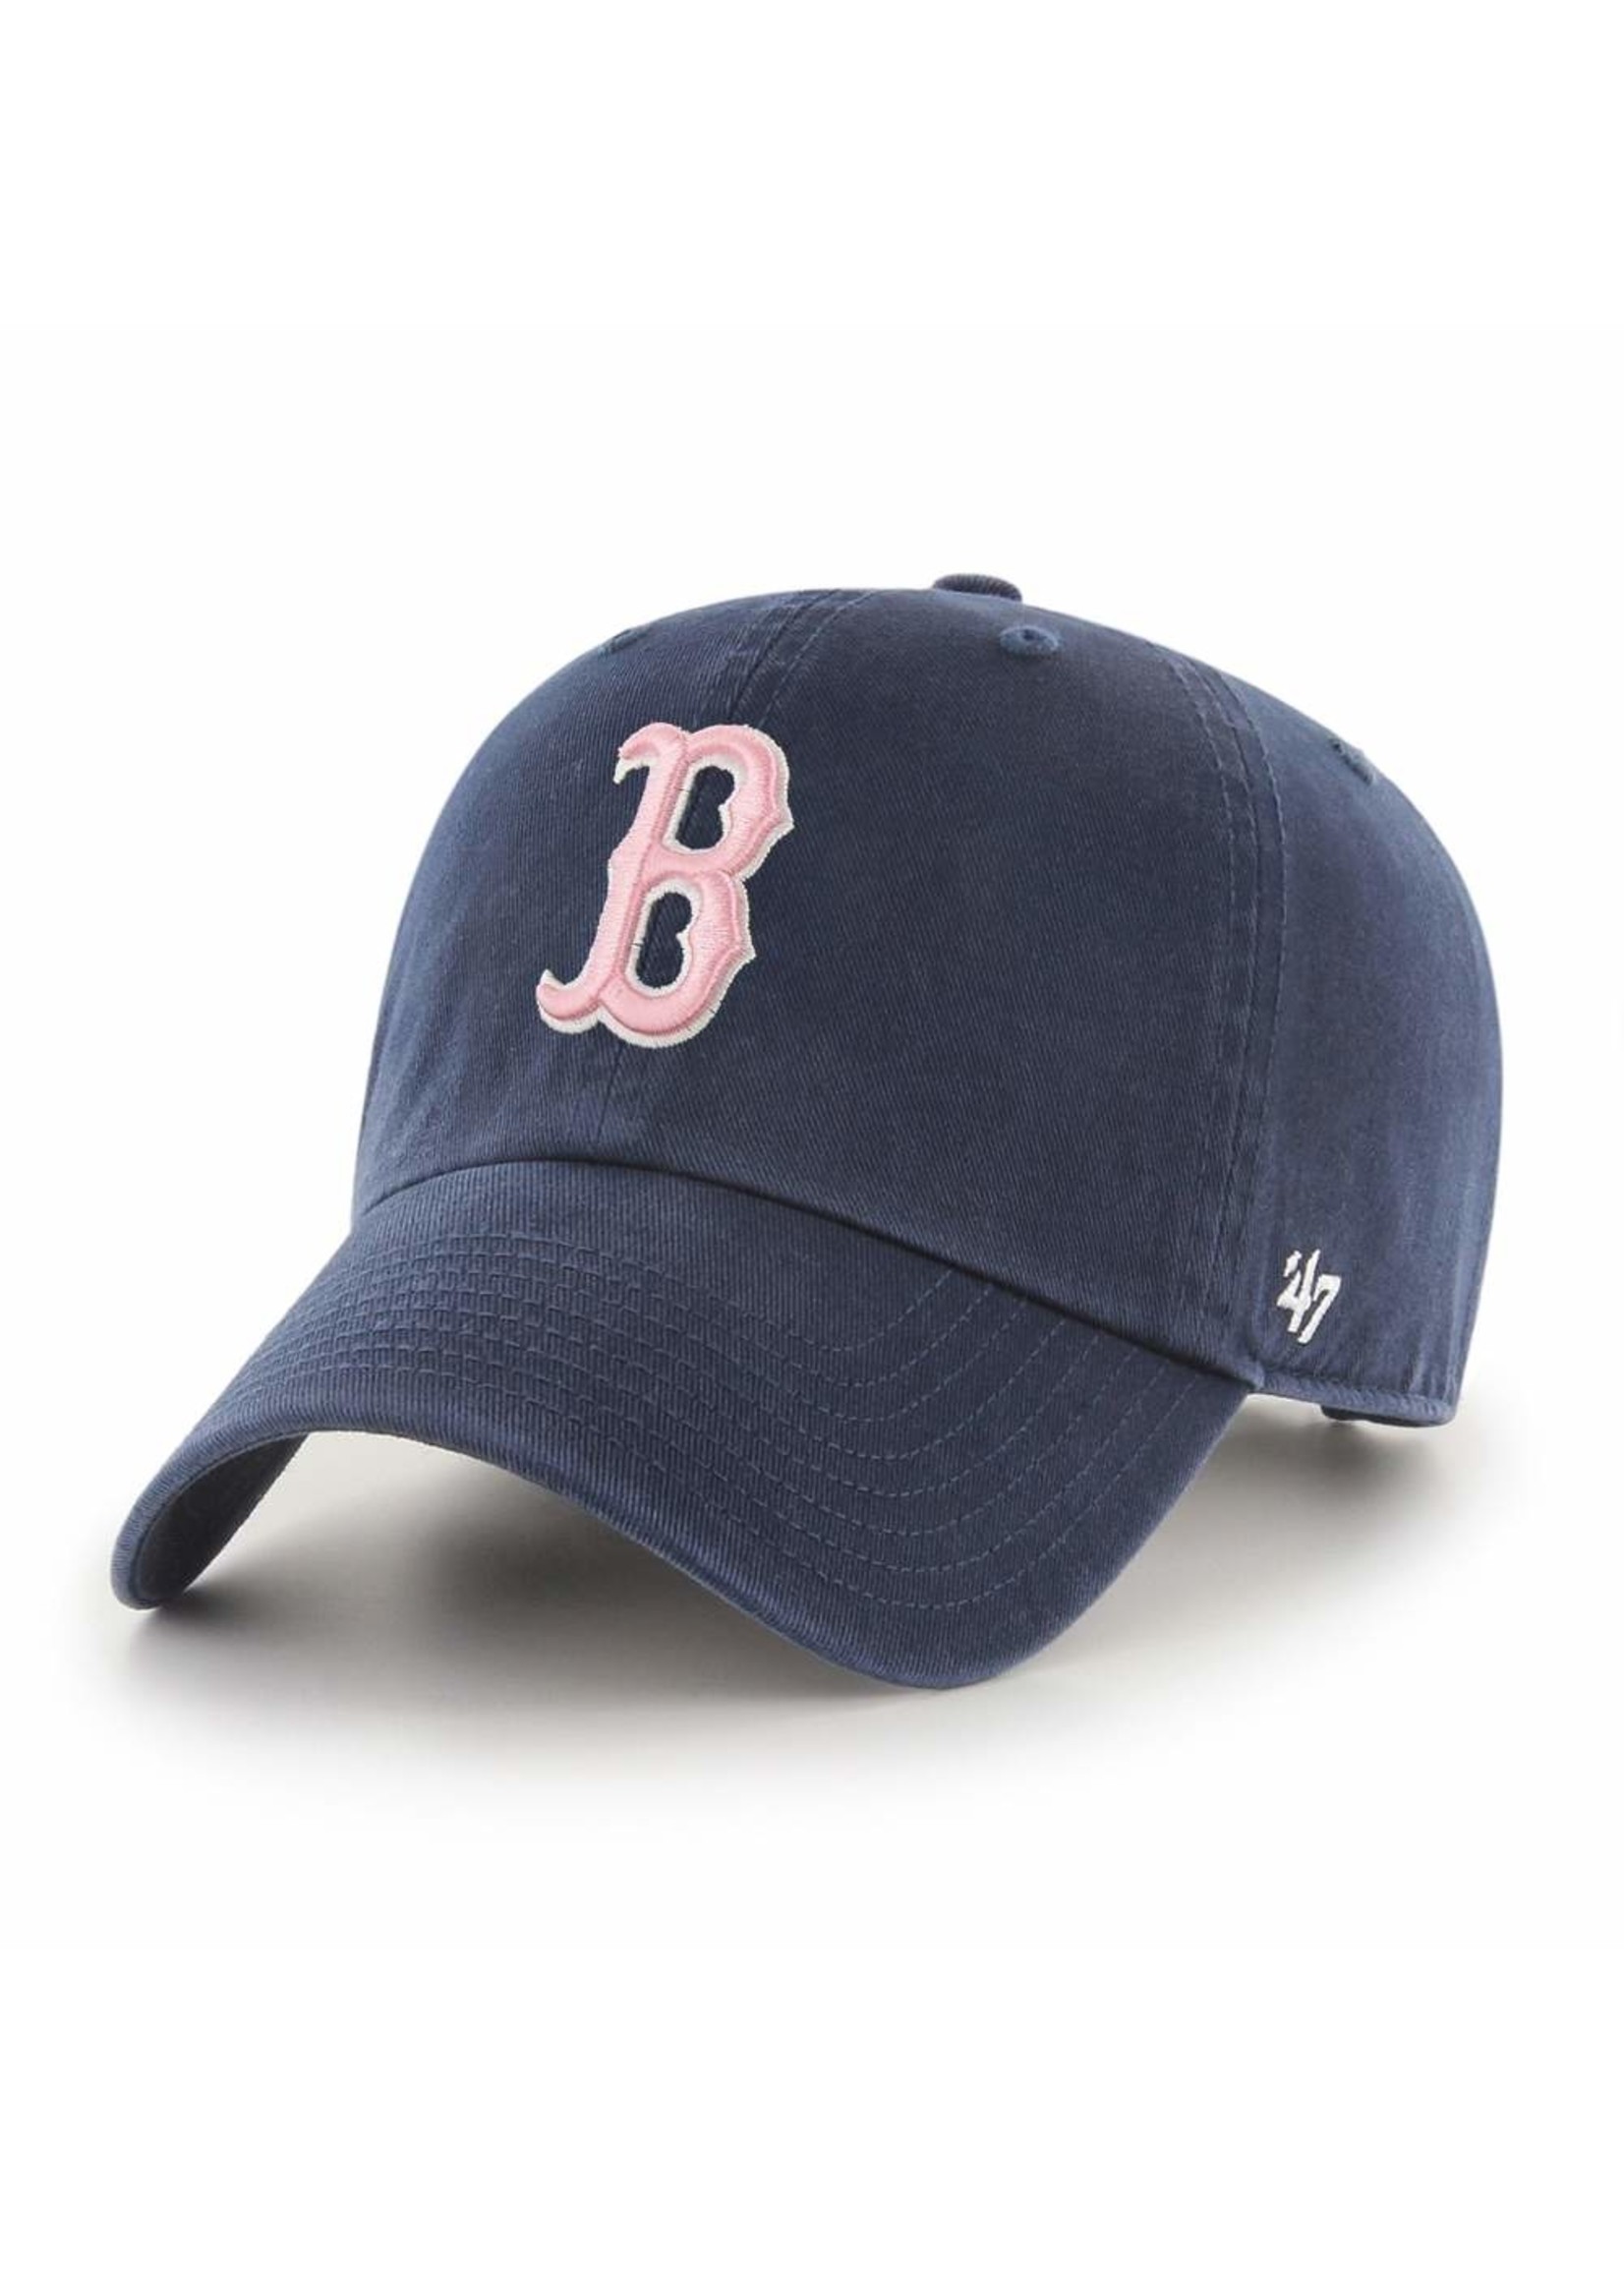 '47 Brand Boston Red Sox "B" Clean Up Hat Navy/Light Pink Adjustable Women